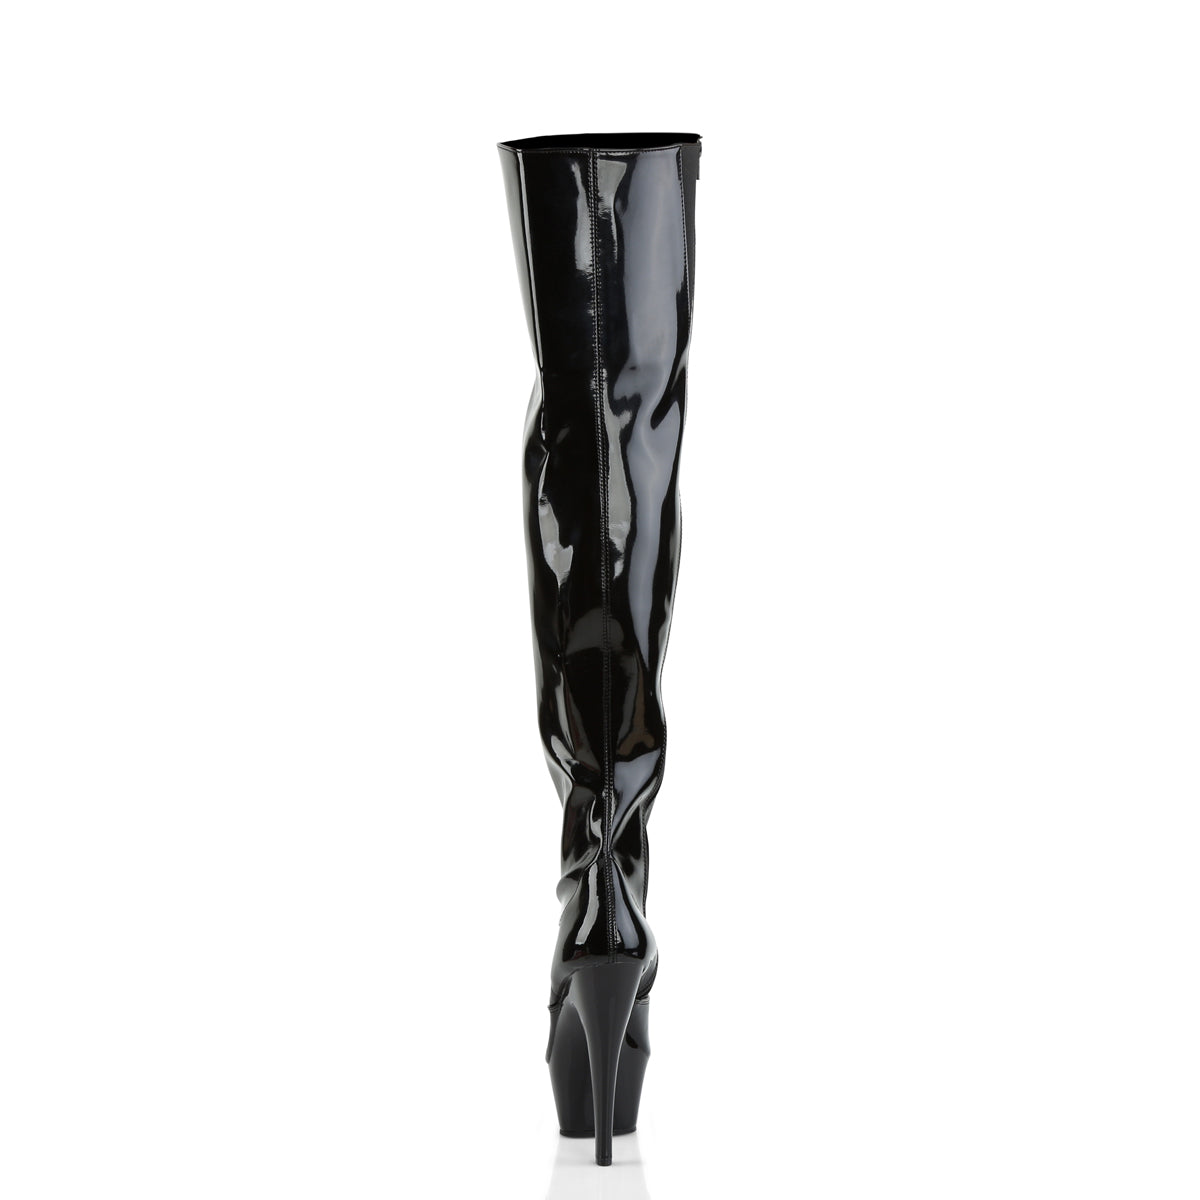 KISS-3010 Pleaser 6" Heel Black Patent Pole Dancing Platform-Pleaser- Sexy Shoes Fetish Footwear